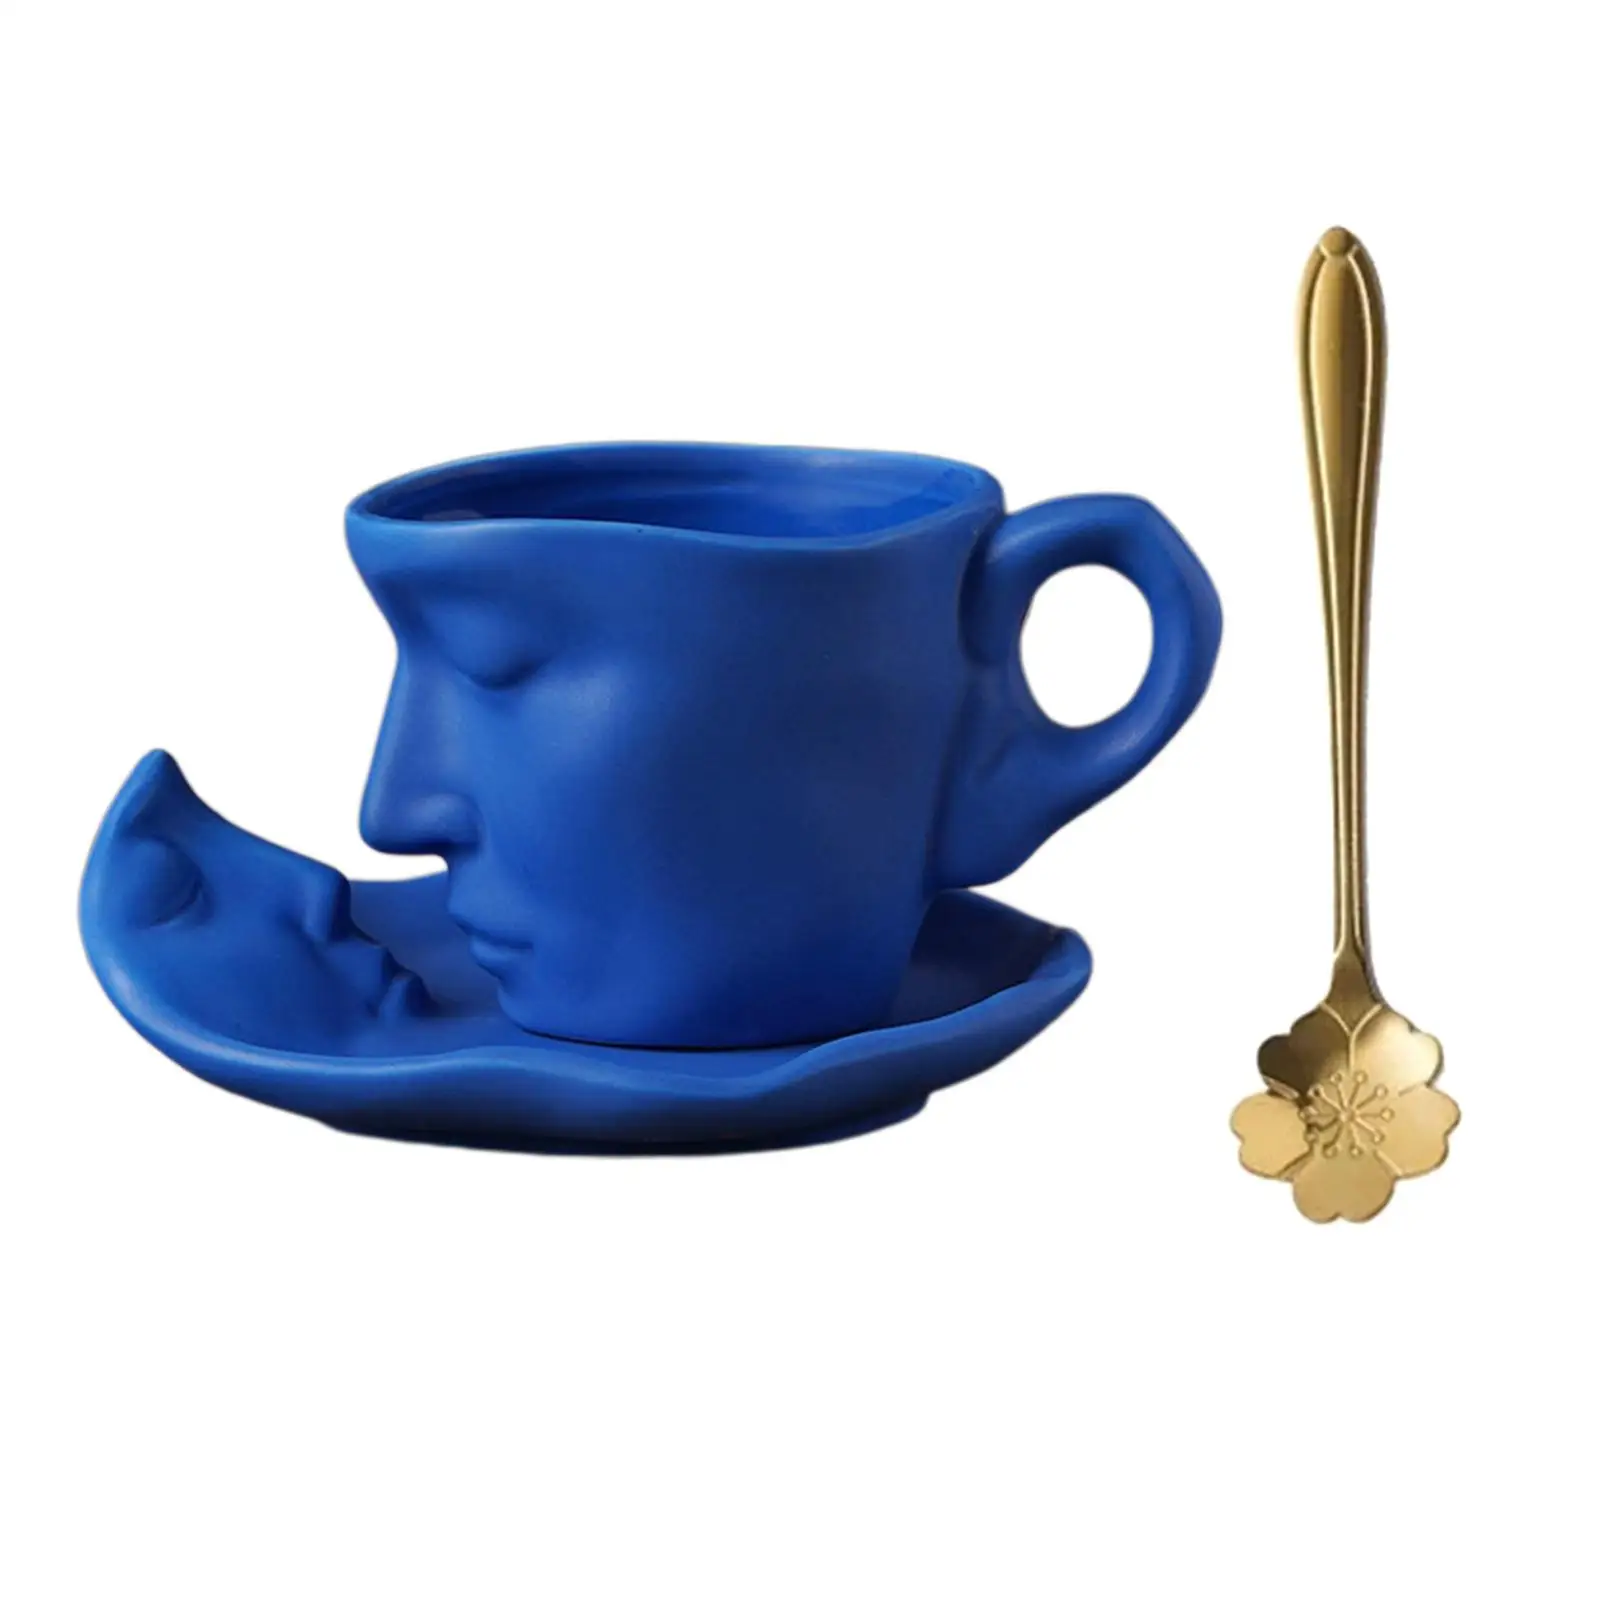 3D Human Face Kissing Mug Espresso Mugs Table Arts for Party Creative Gift